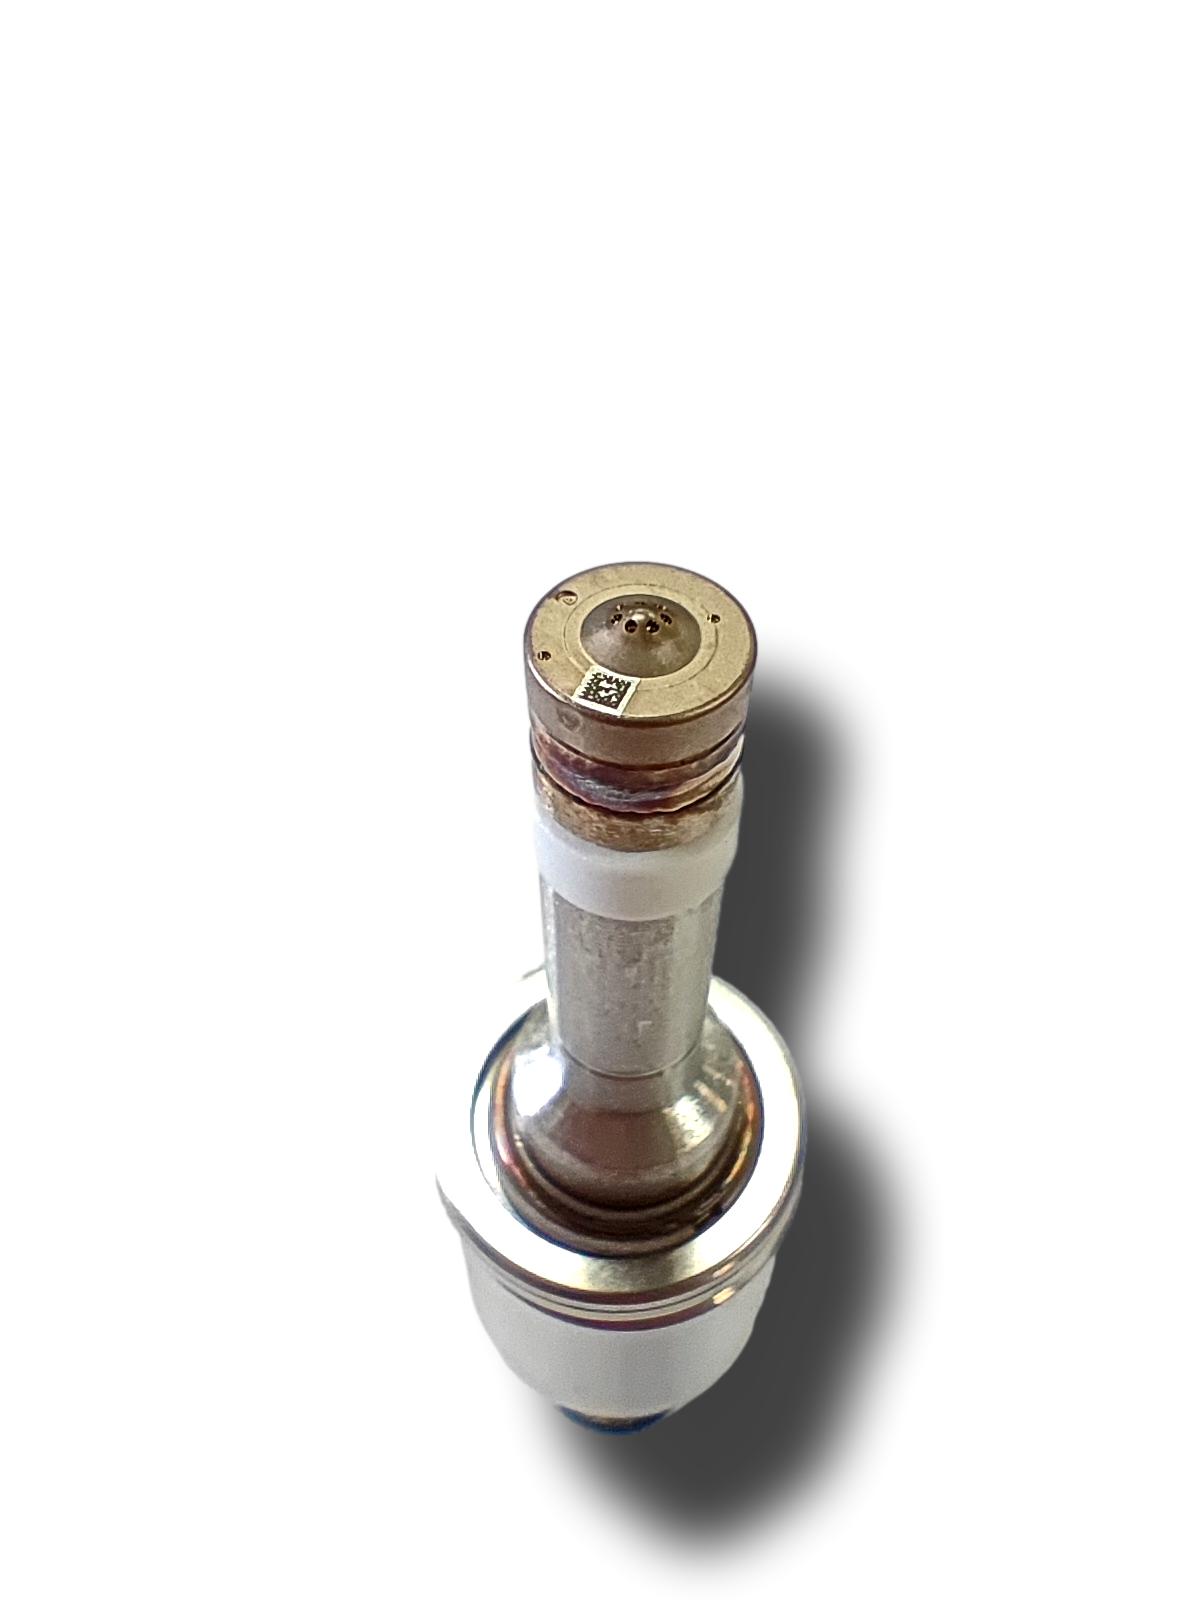 Nissan Juke Petrol Injector 1.6 2010-18 166001VA0C 166001KC0A (#28032024)